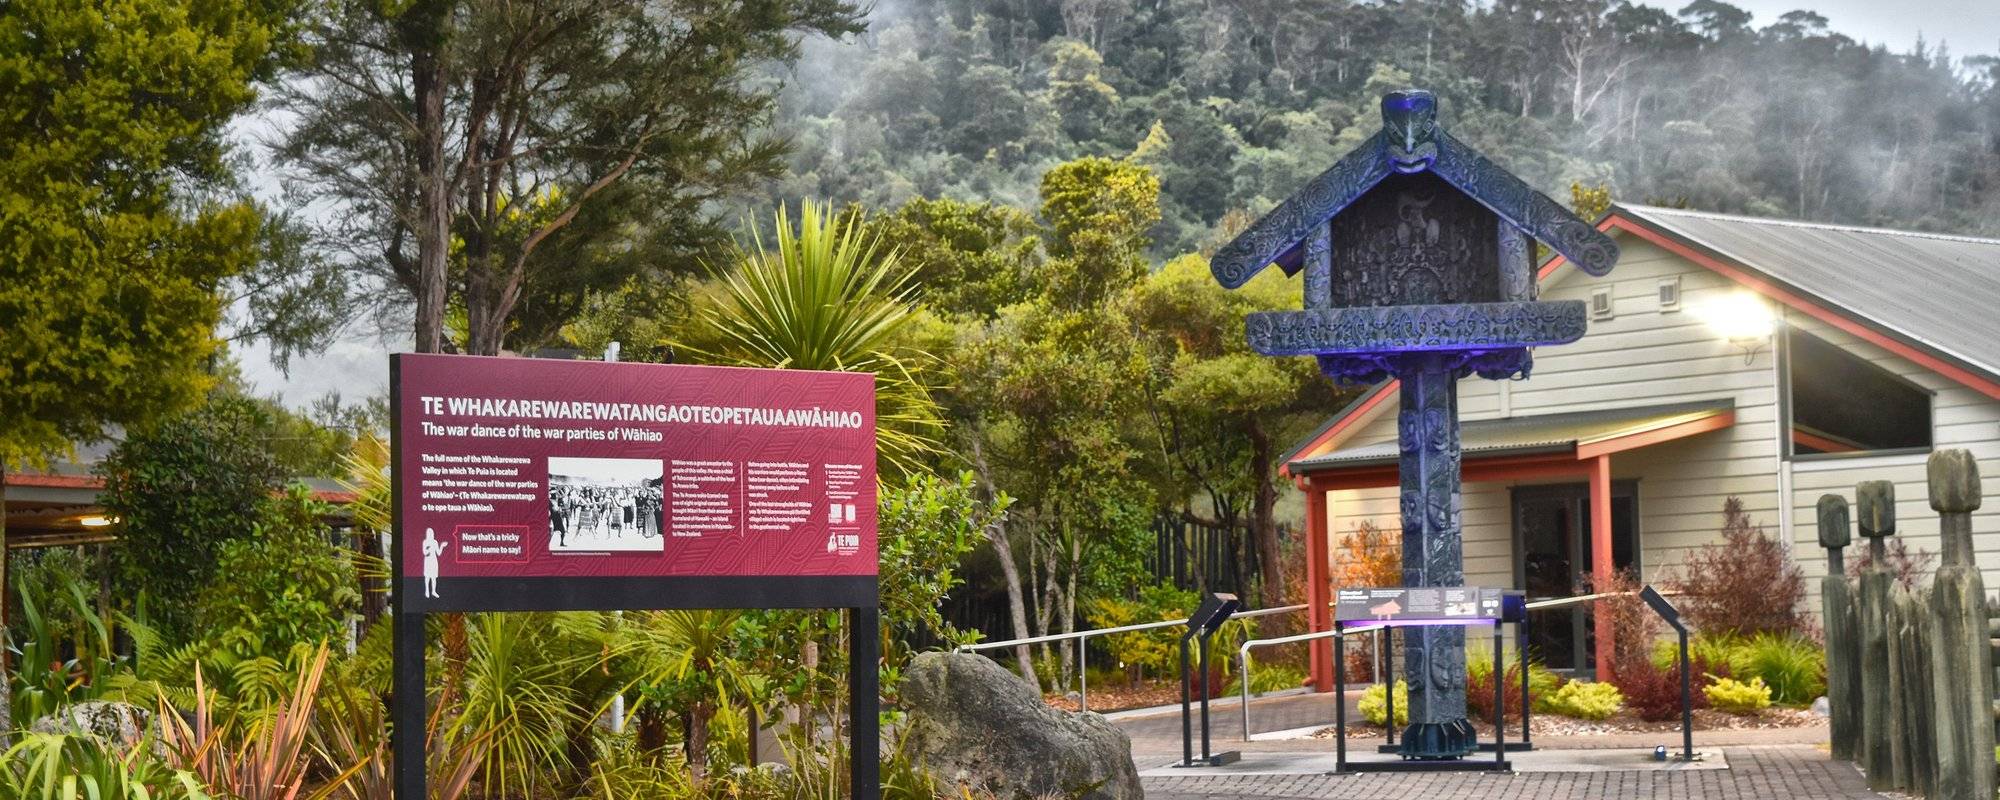 Travelling with Stabilo #28: Te Puia Maori Cultural Centre 经纬游踪 #28: Te Puia 毛里文化中心